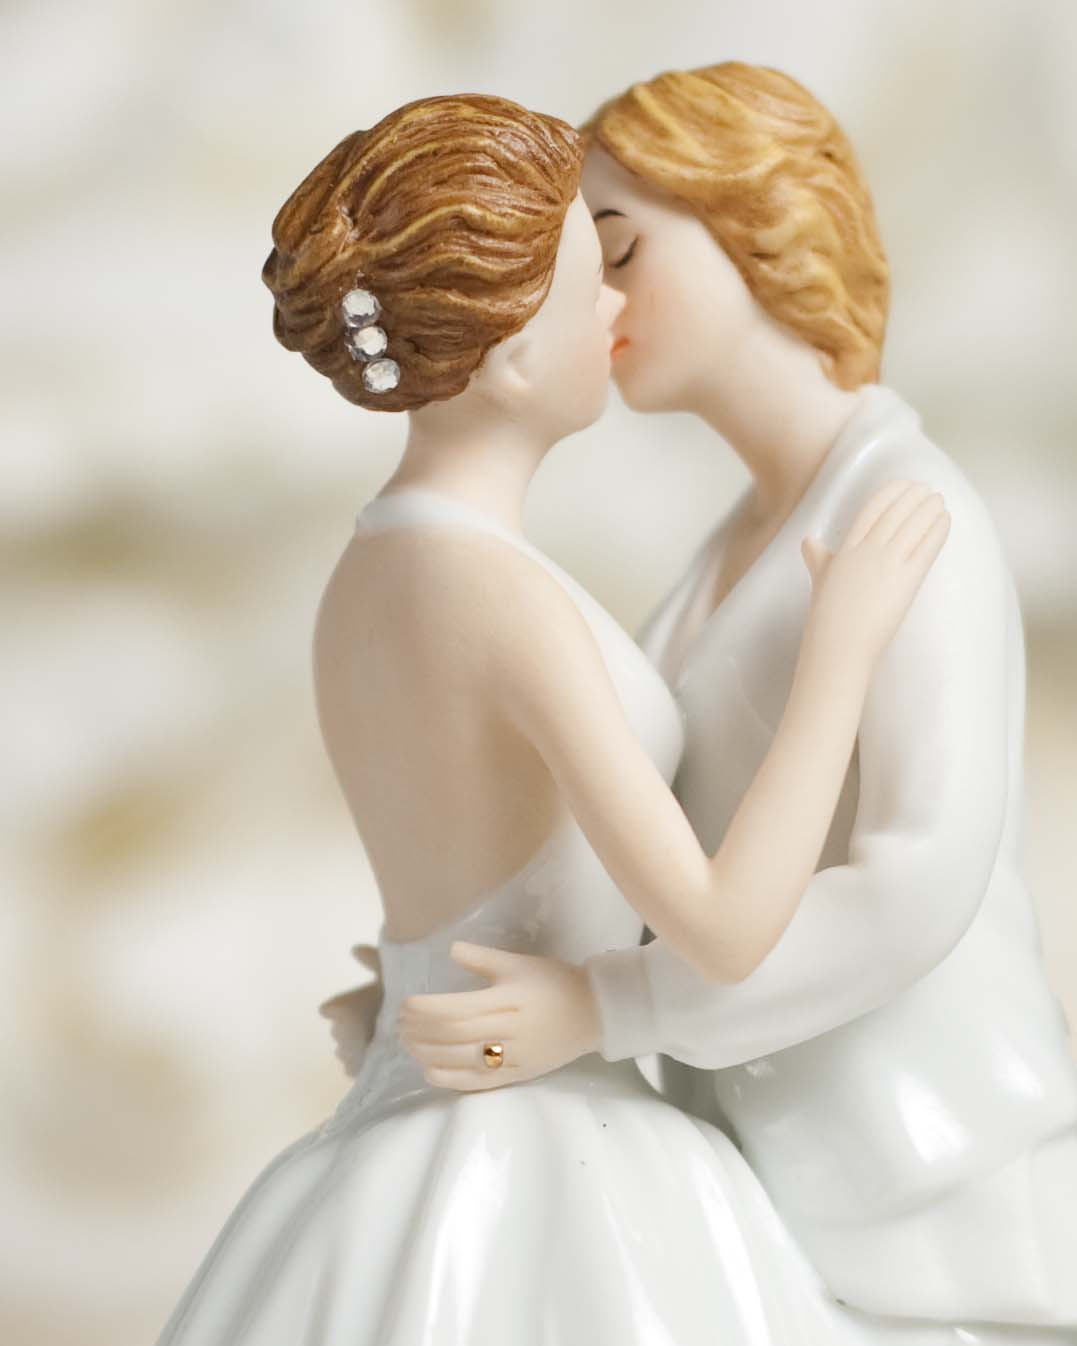 Lesbian Wedding Cake Topper
 "Romance" Gay Lesbian Wedding Cake Topper